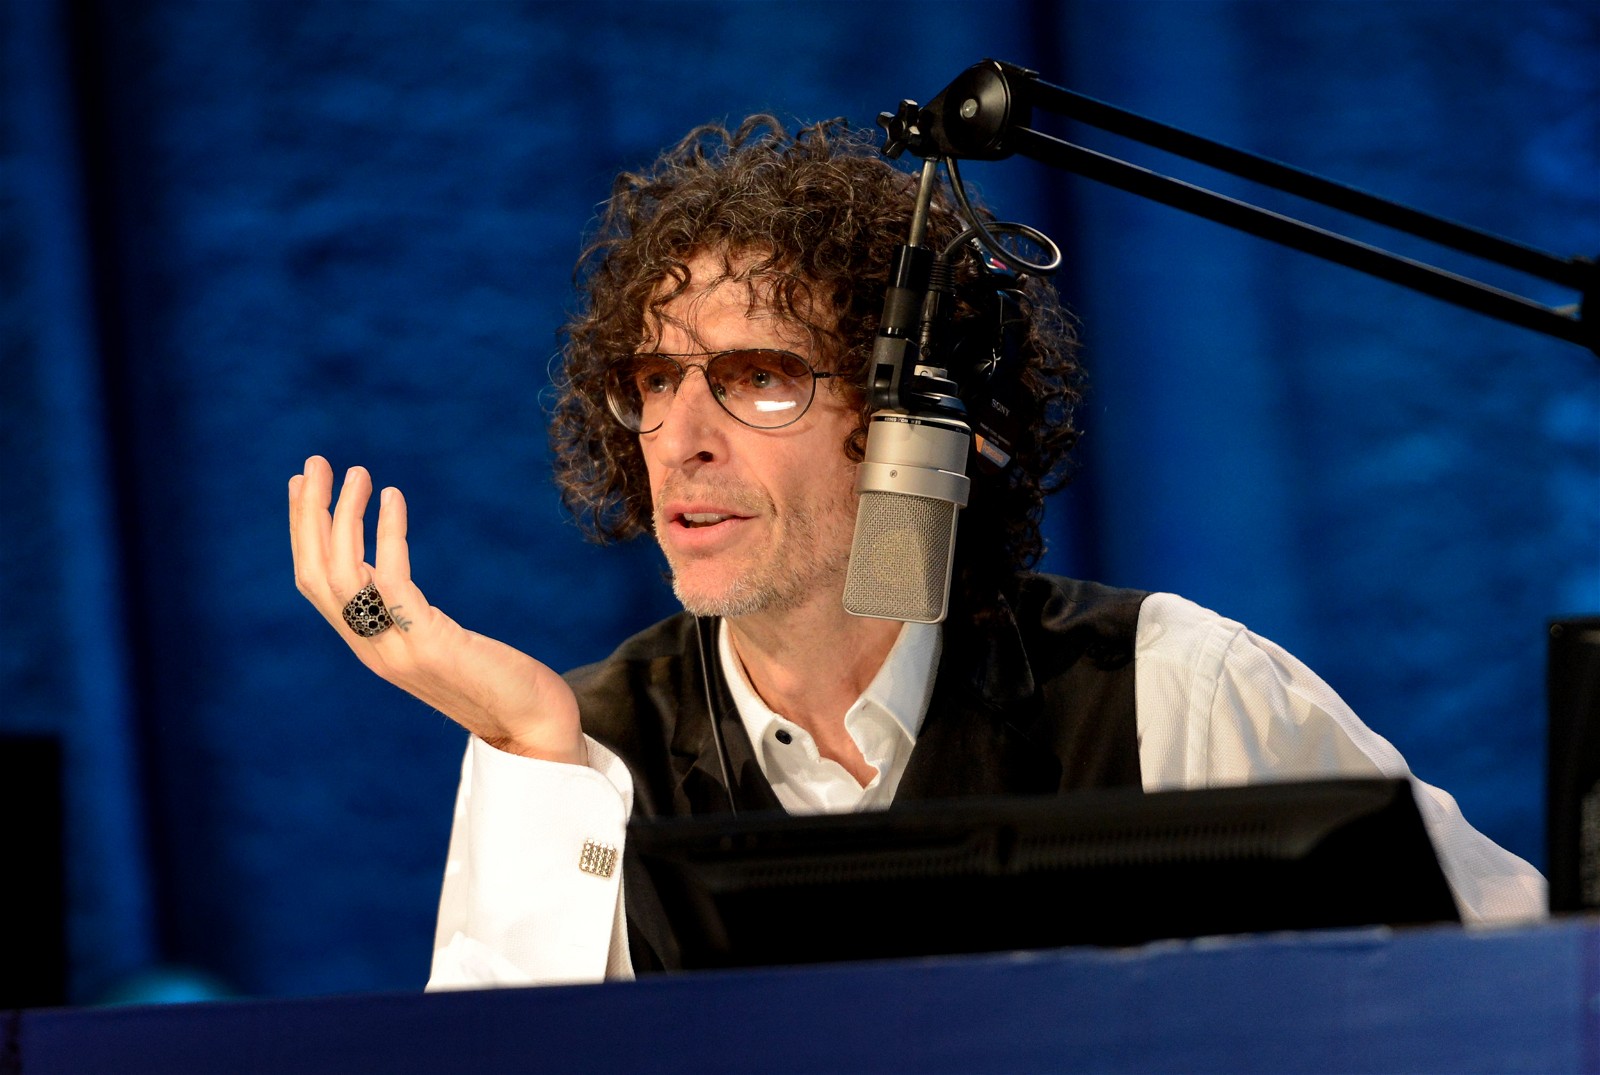 Howard Stern, Radio show host